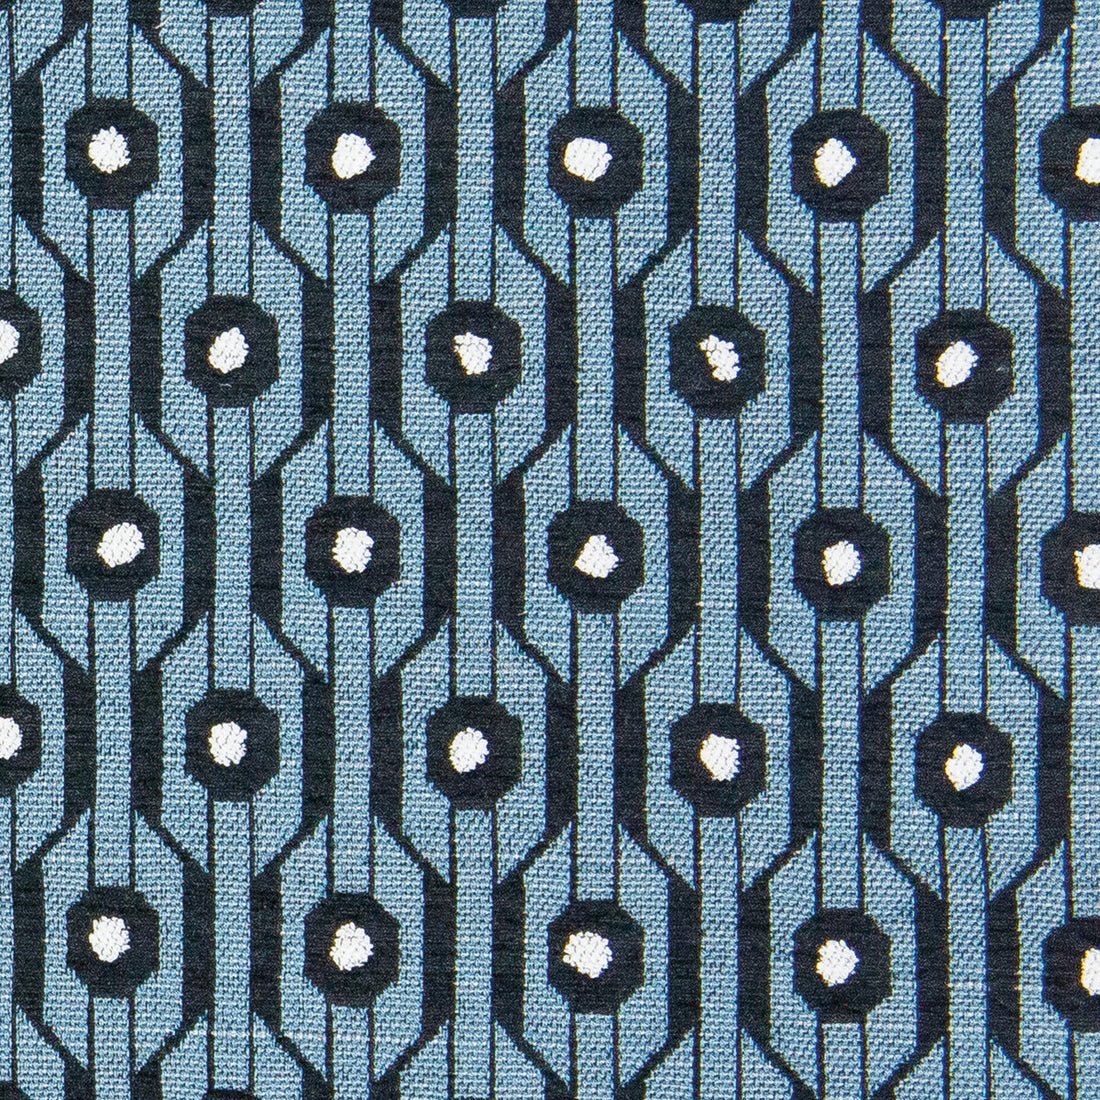 Almirante fabric in azul color - pattern GDT5576.001.0 - by Gaston y Daniela in the Gaston Nuevo Mundo collection